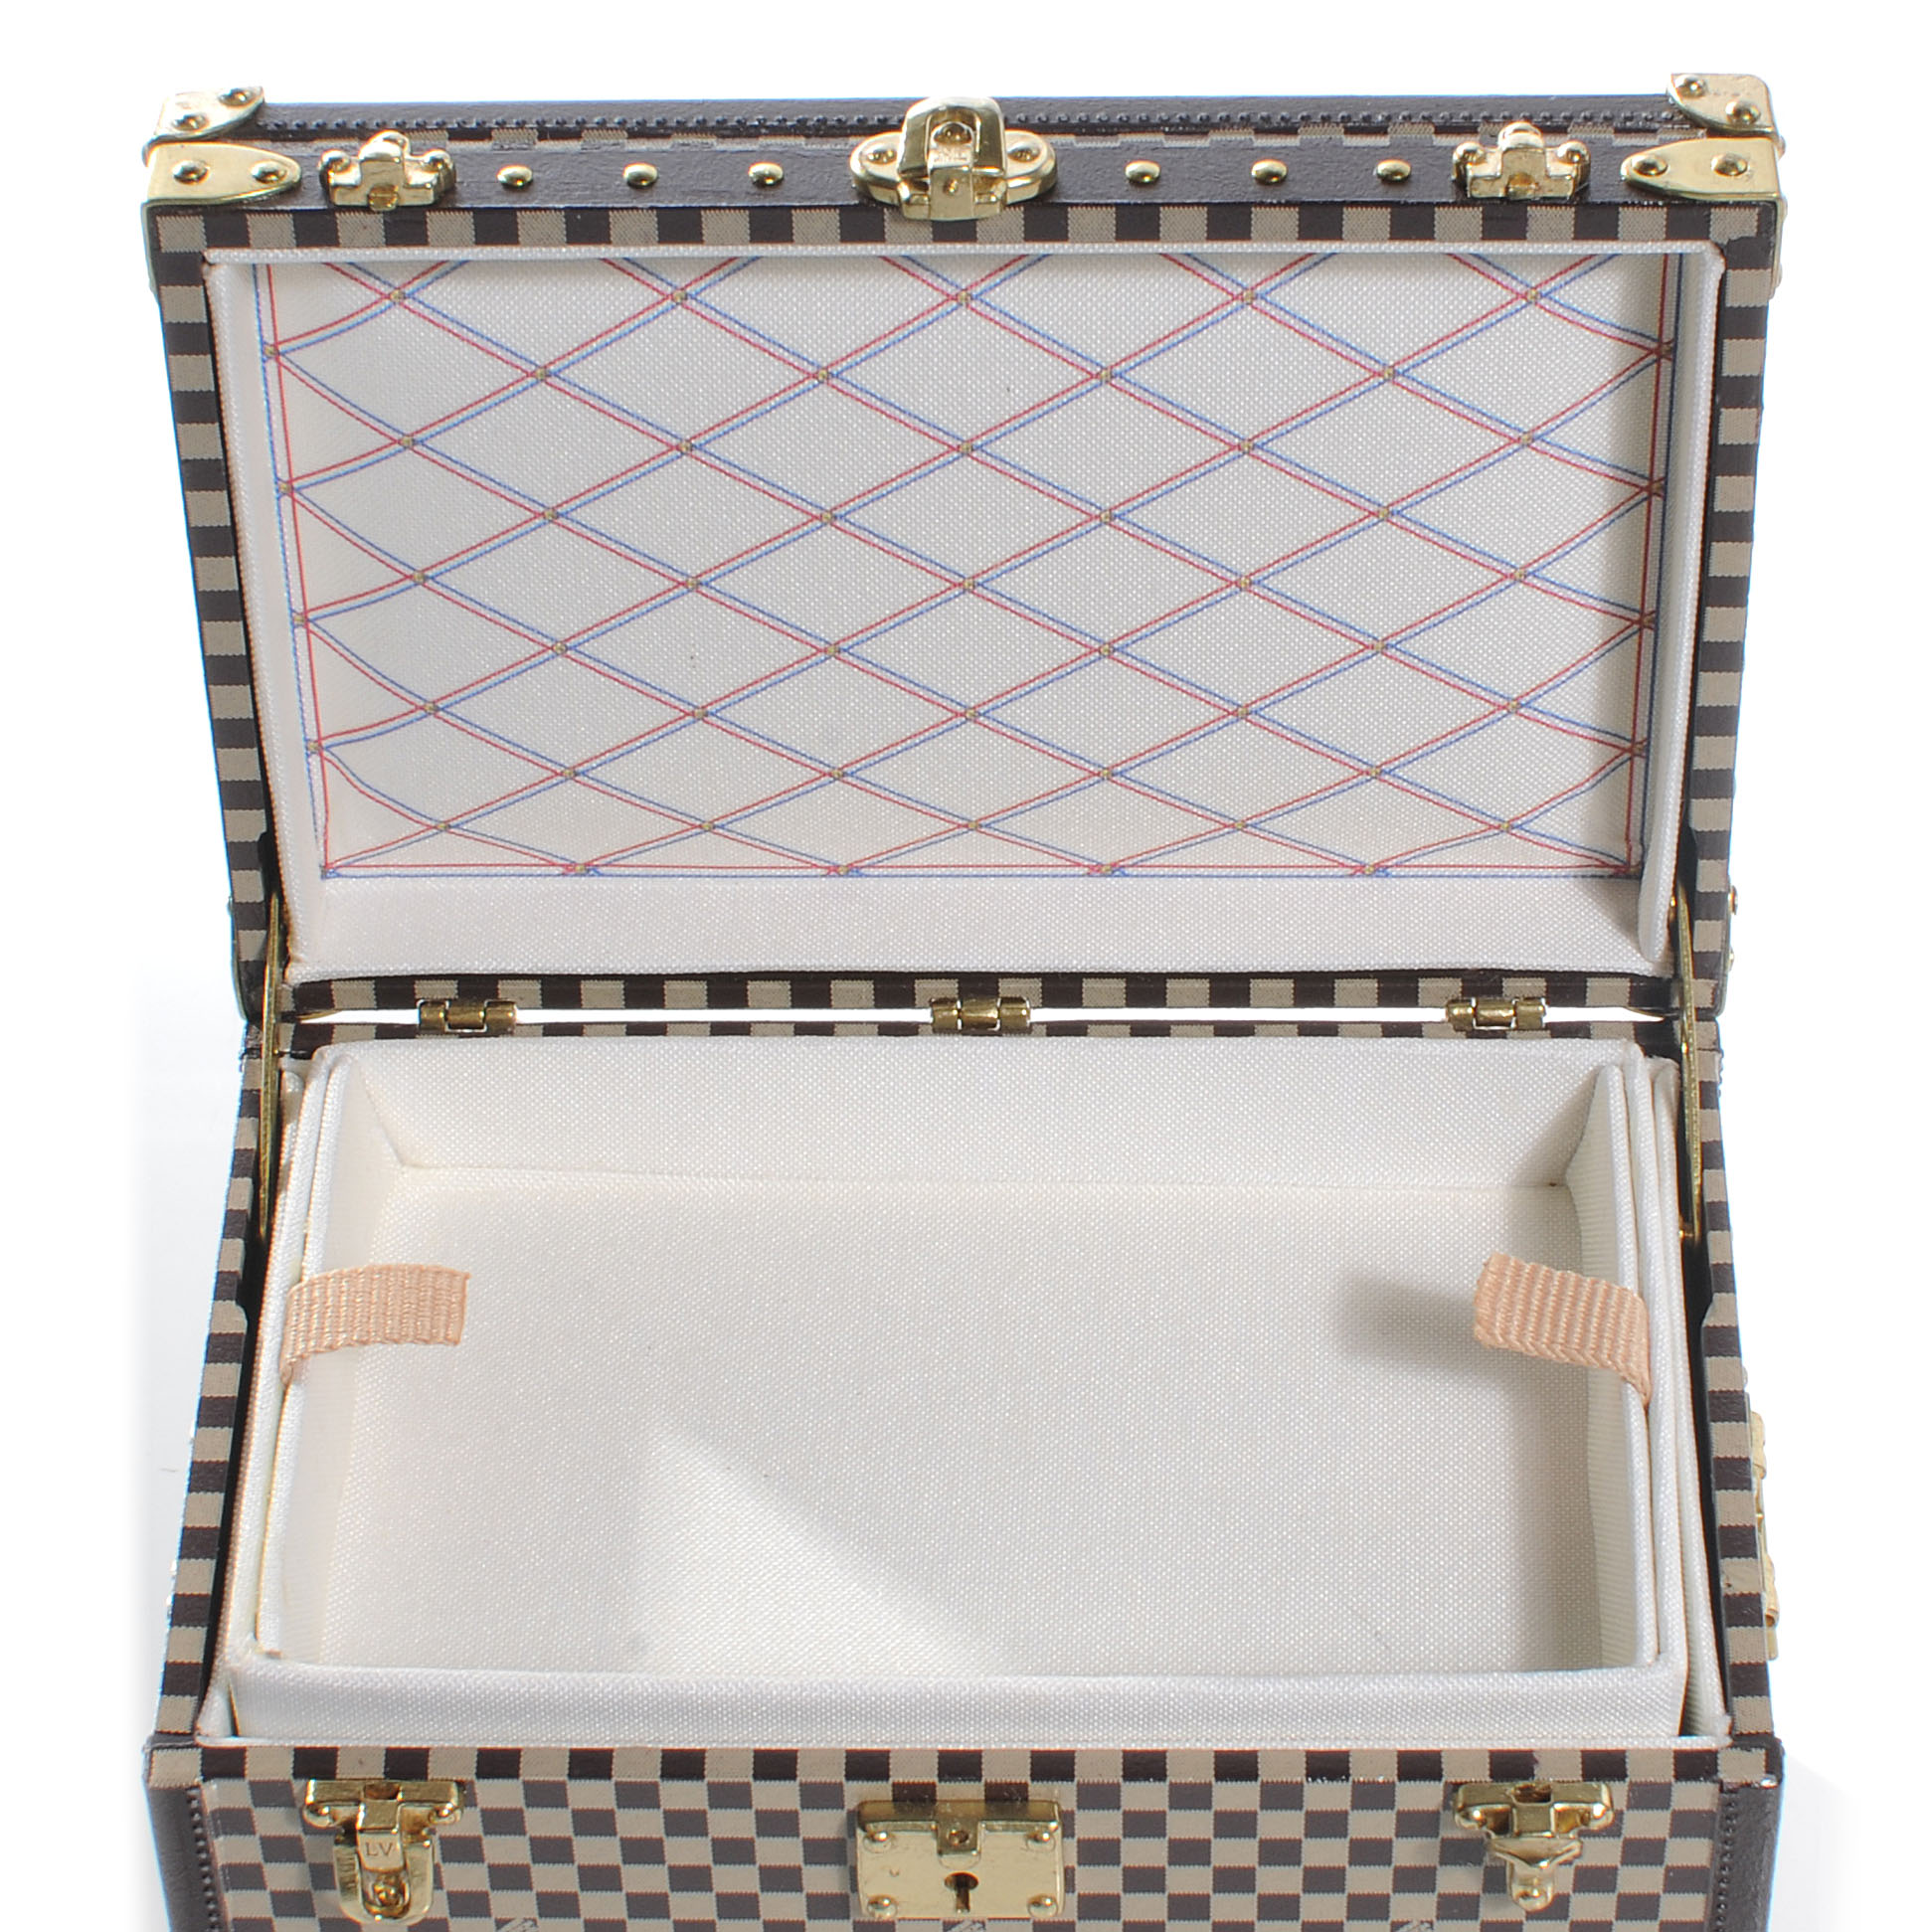 LOUIS VUITTON Monogram Ring Box Mini Trunk Case 219986